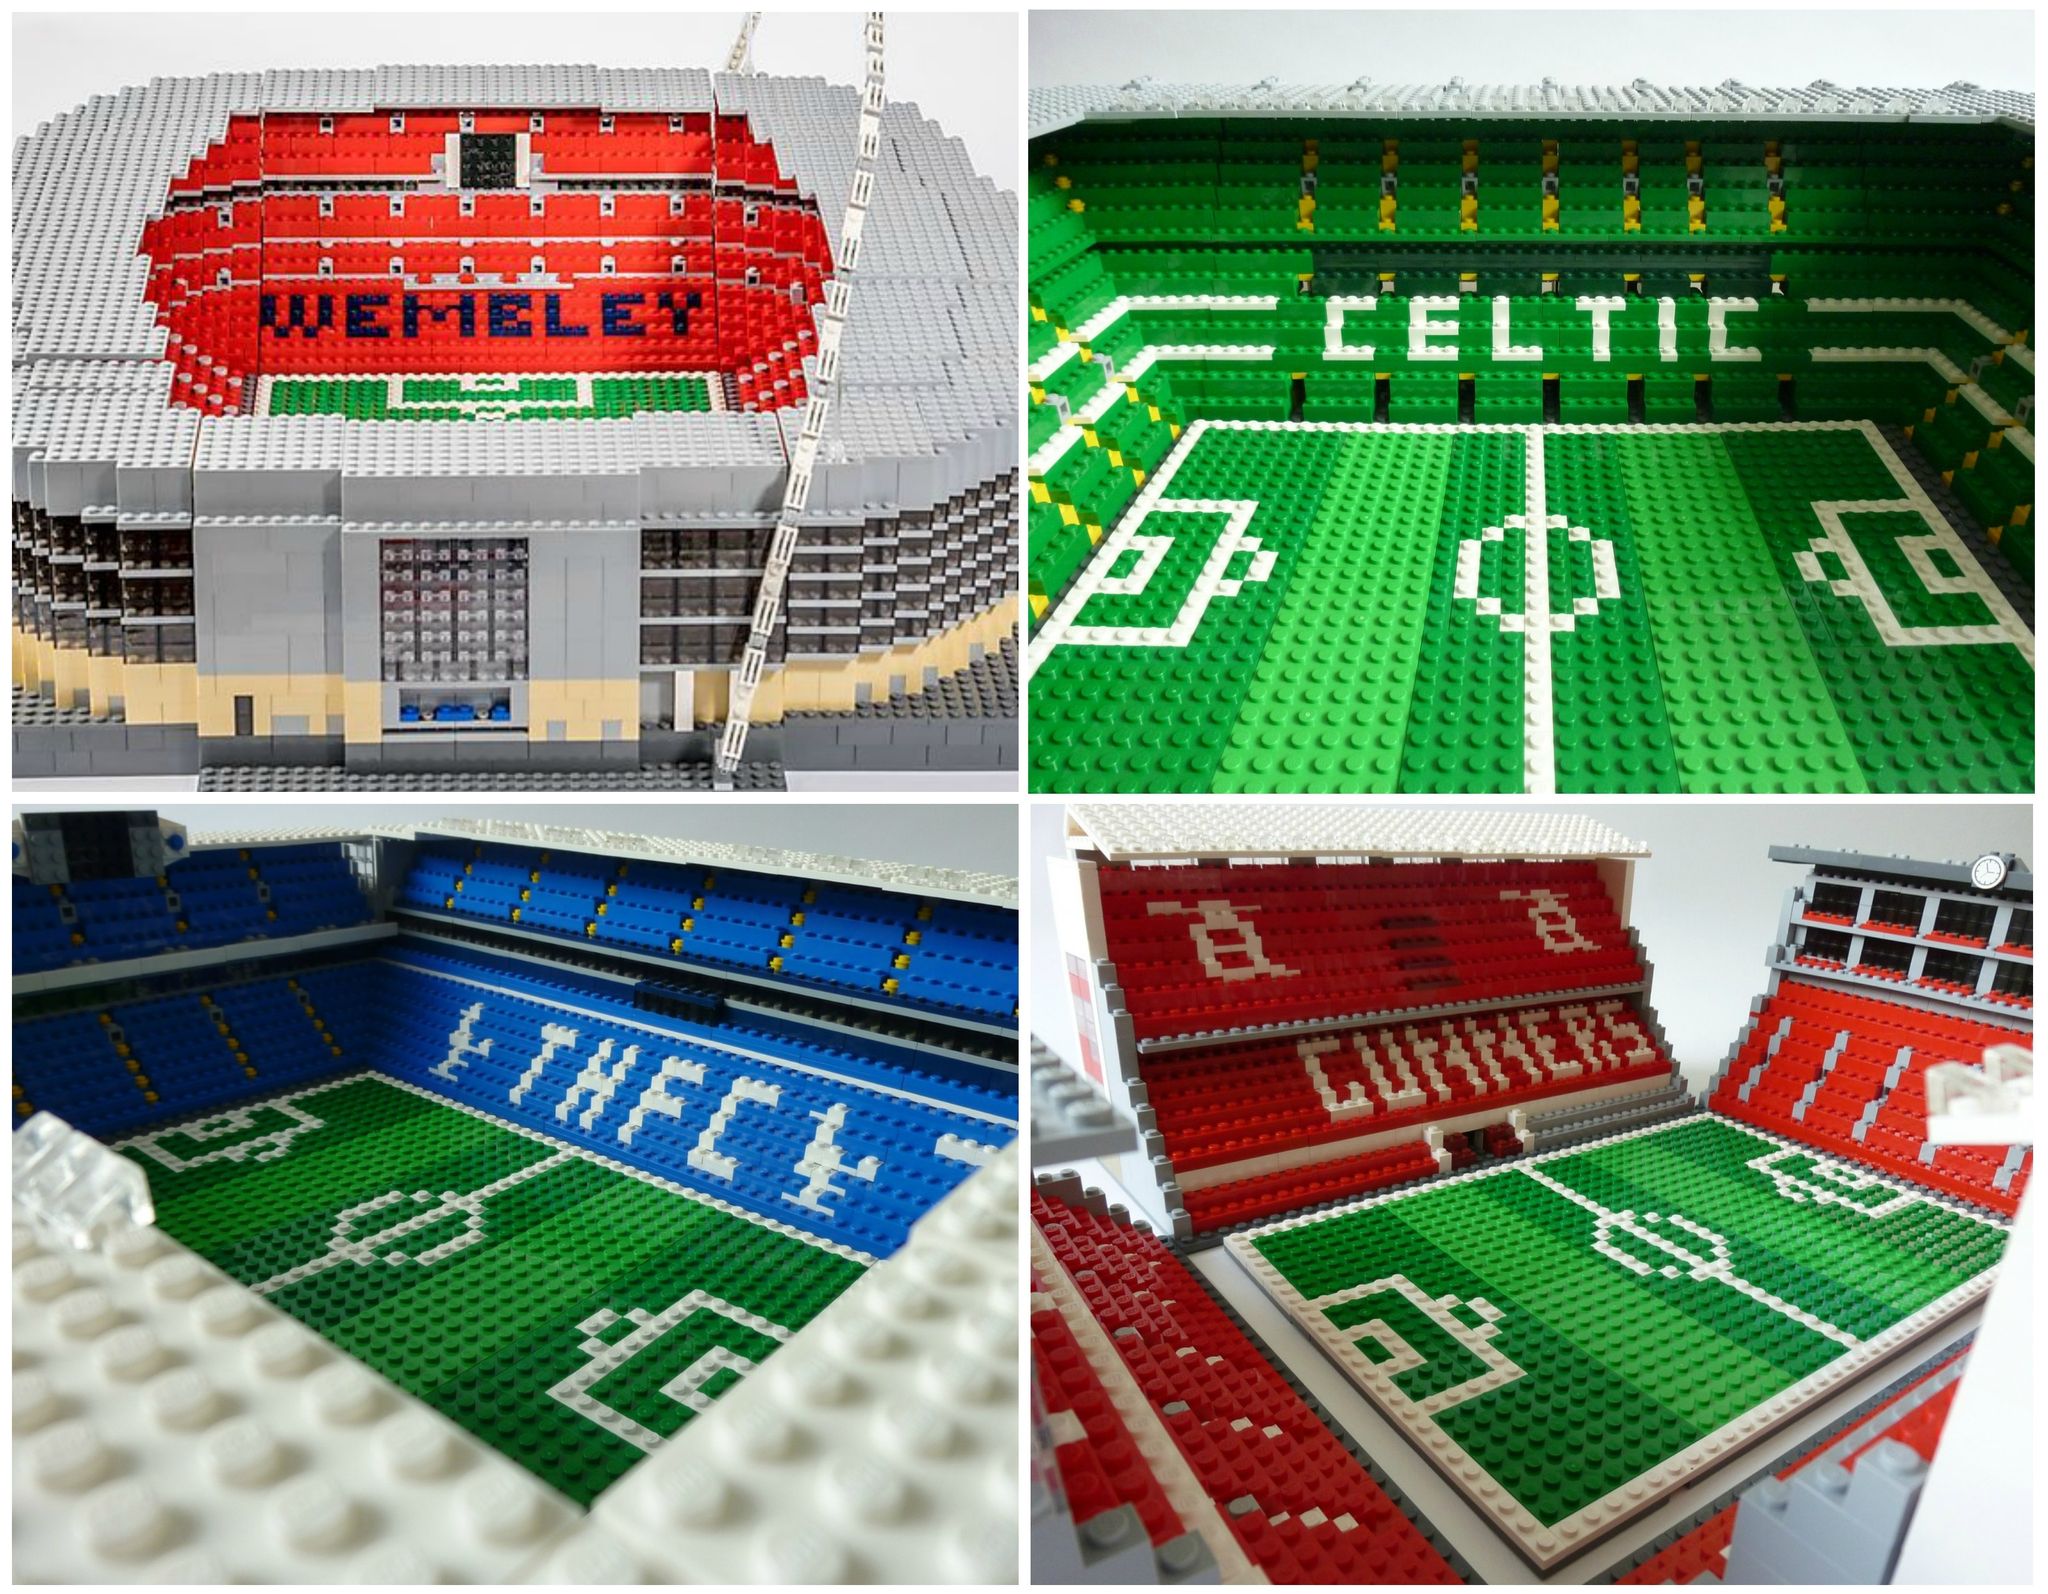 Stade de Foot de Manchester United en Lego